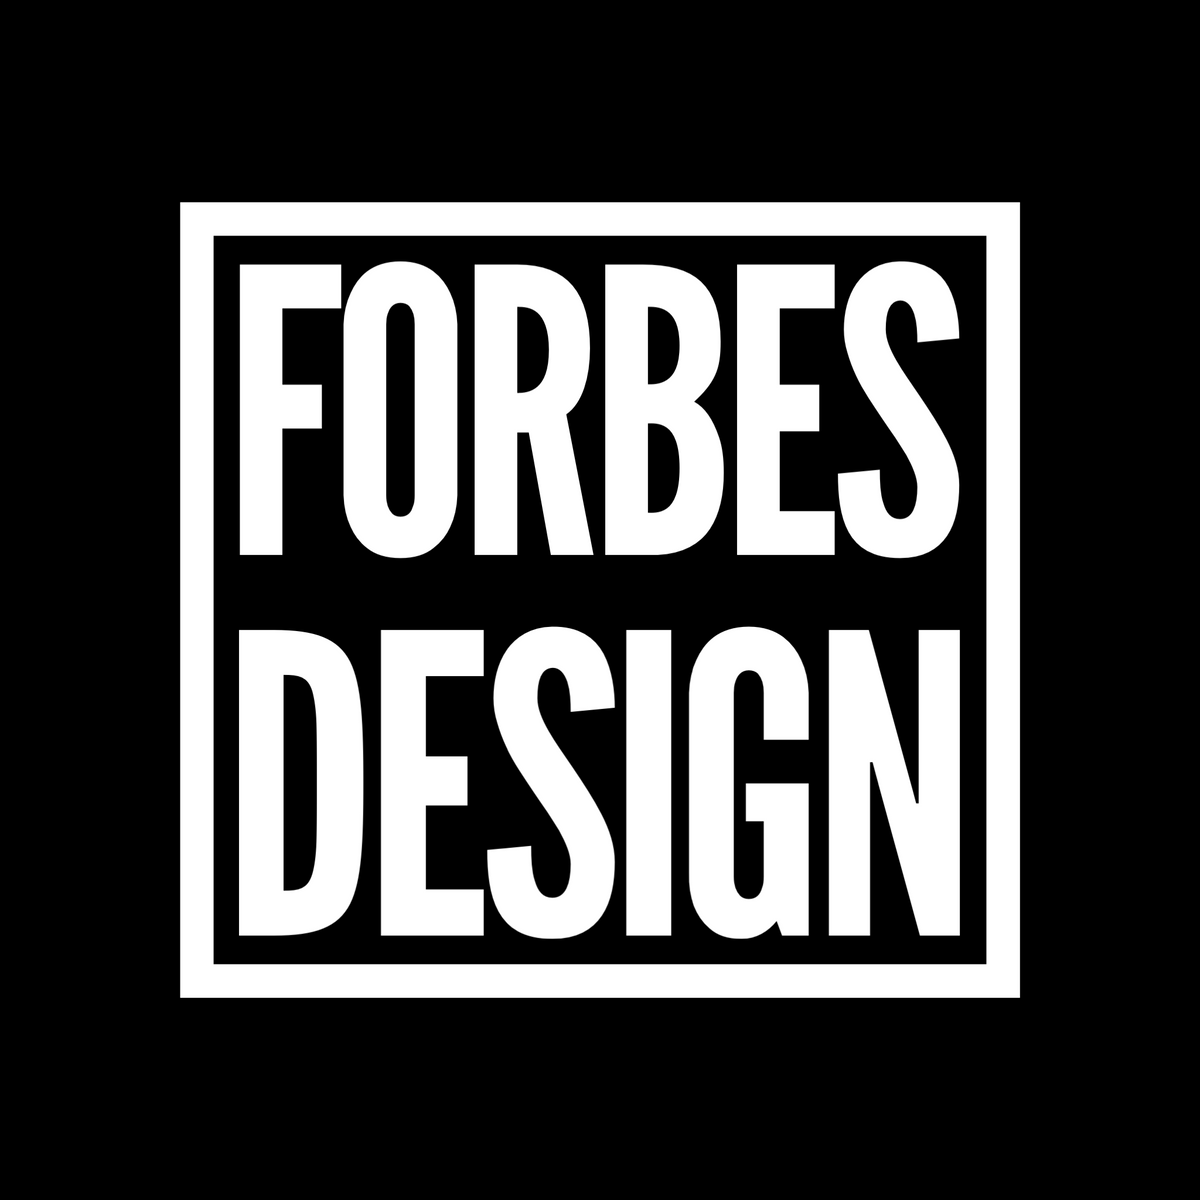 Detroit Beanie – Forbes Design